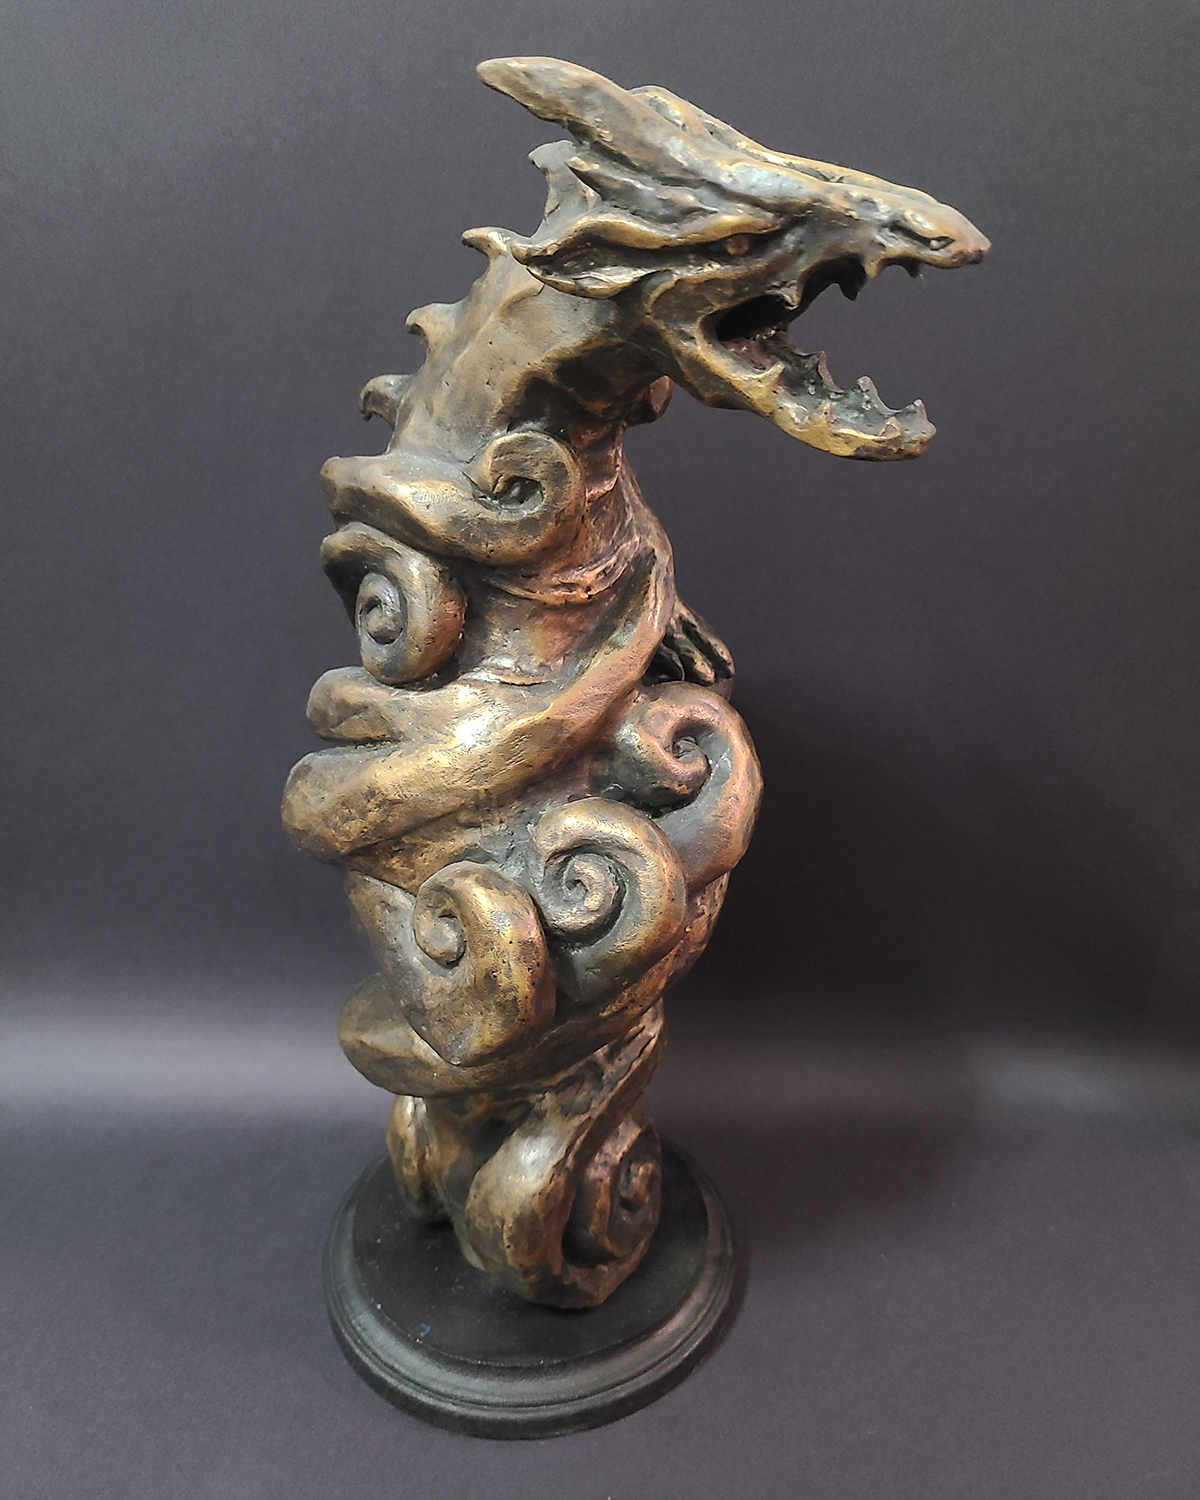 Azure Dragon
by Vanessa Vestena
Bronze
13.75" x 5" x 6"